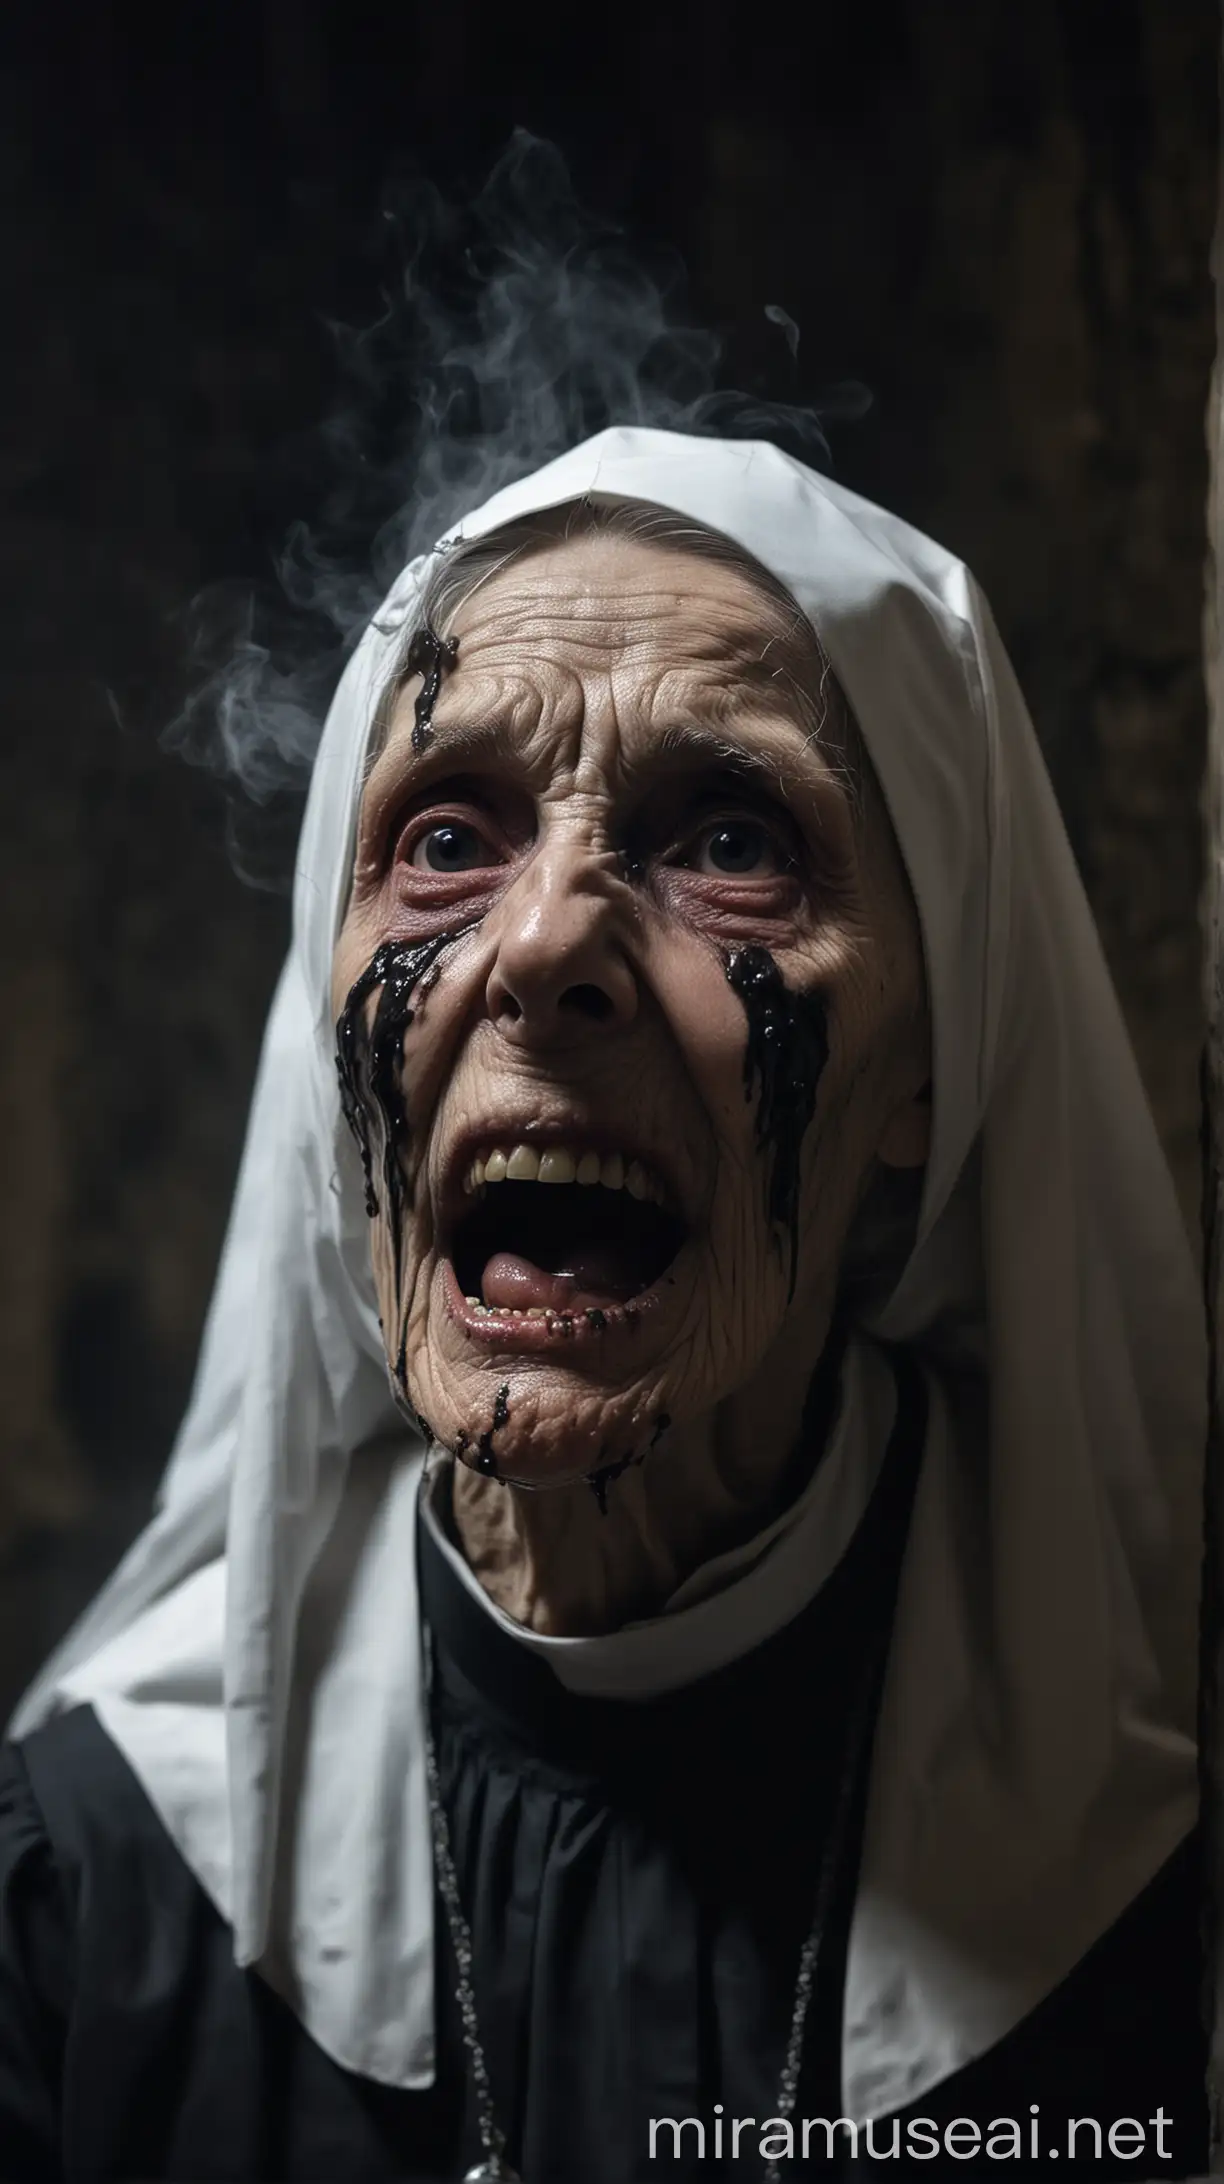 Elderly Catholic Nun in Haunted Monastery Cell